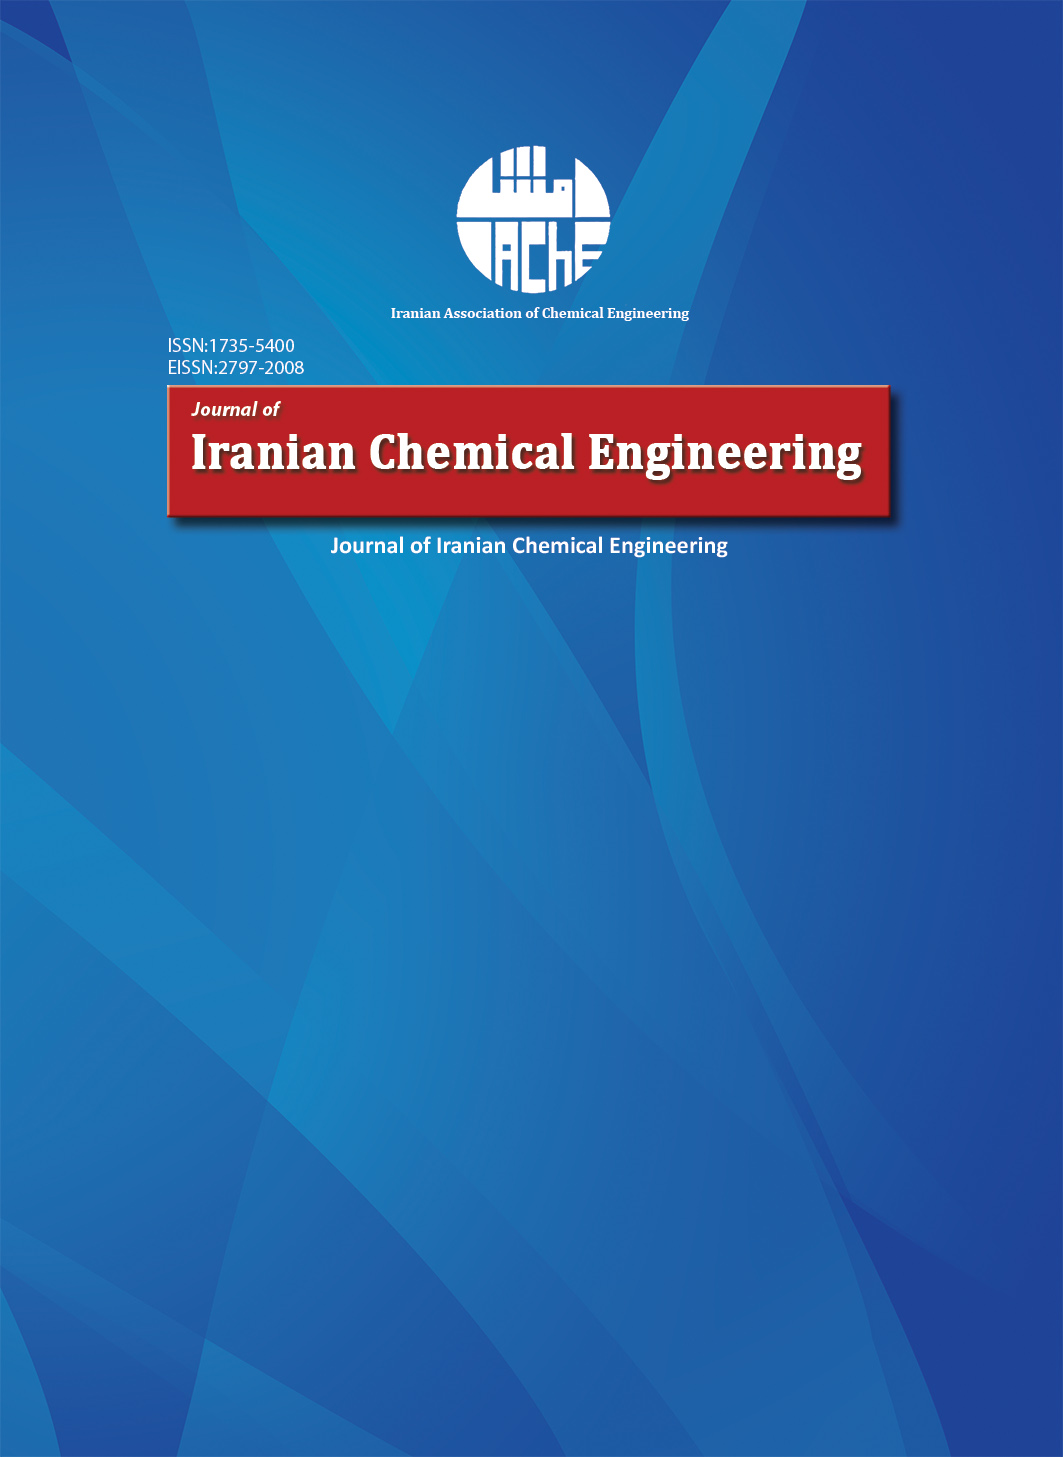 Iranian Chemical Engineering Journal